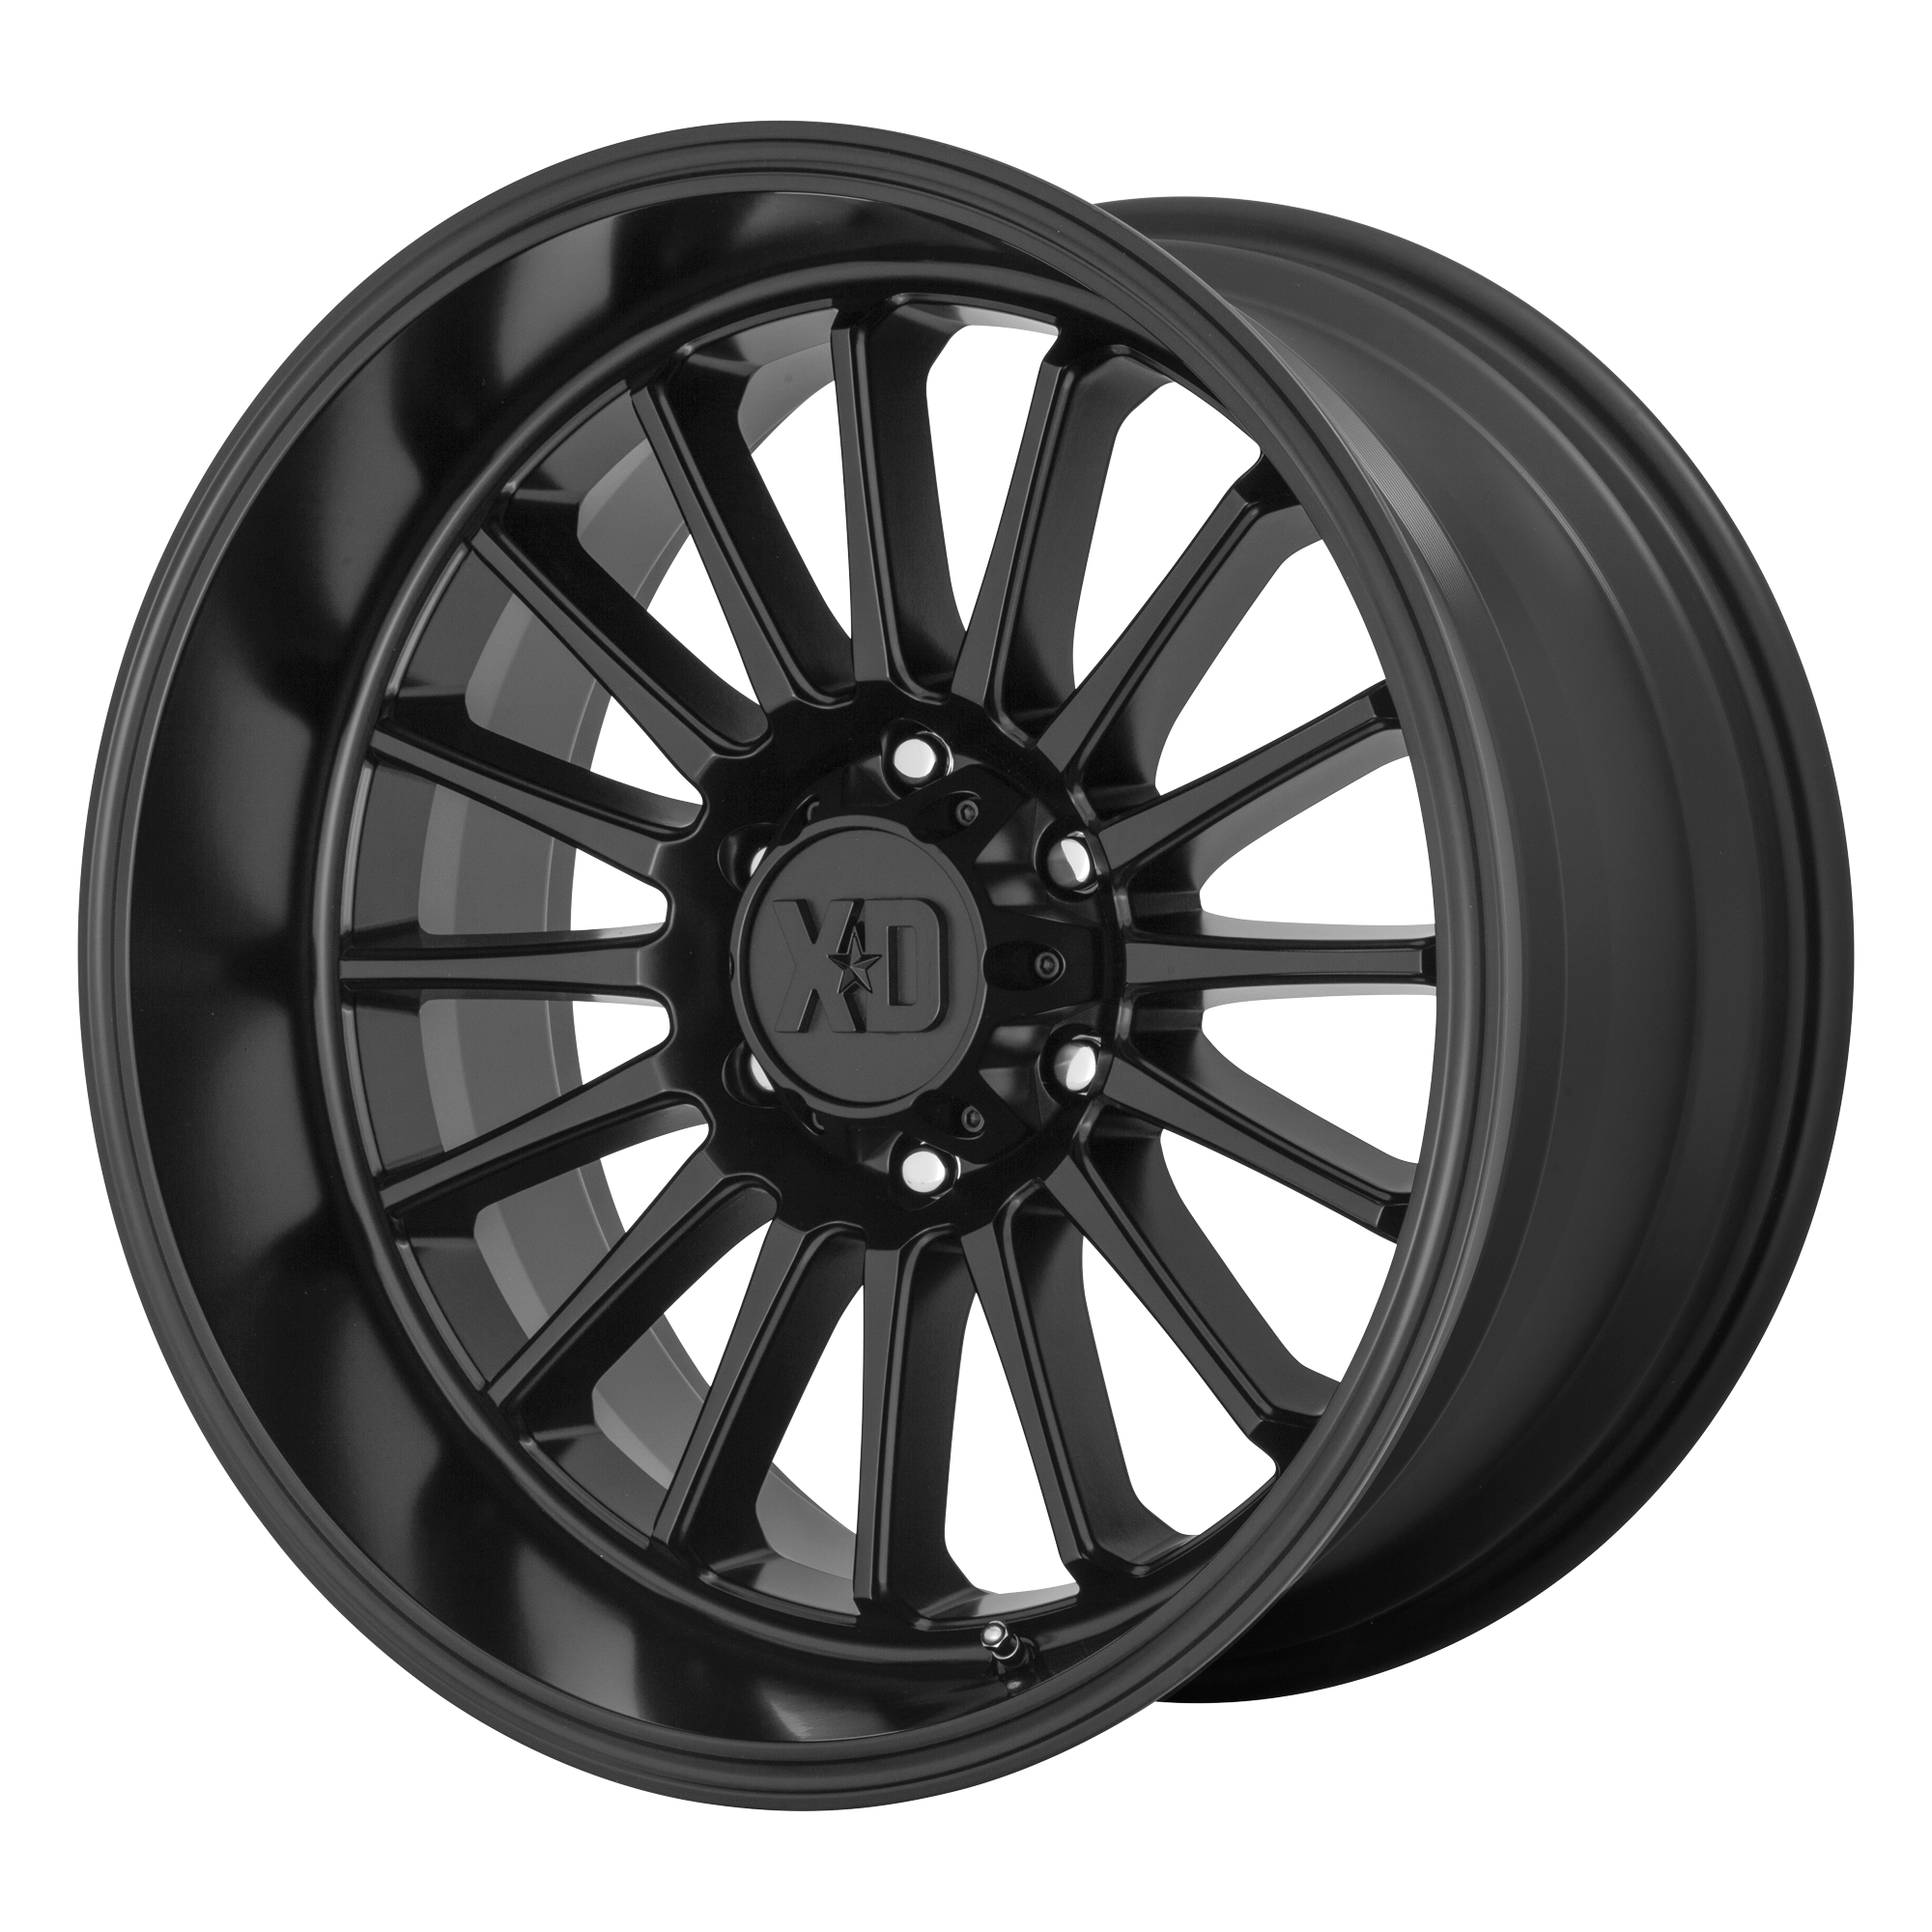 XD 20"x9" Non-Chrome Satin Black Custom Wheel ARSWCWXD85729080700